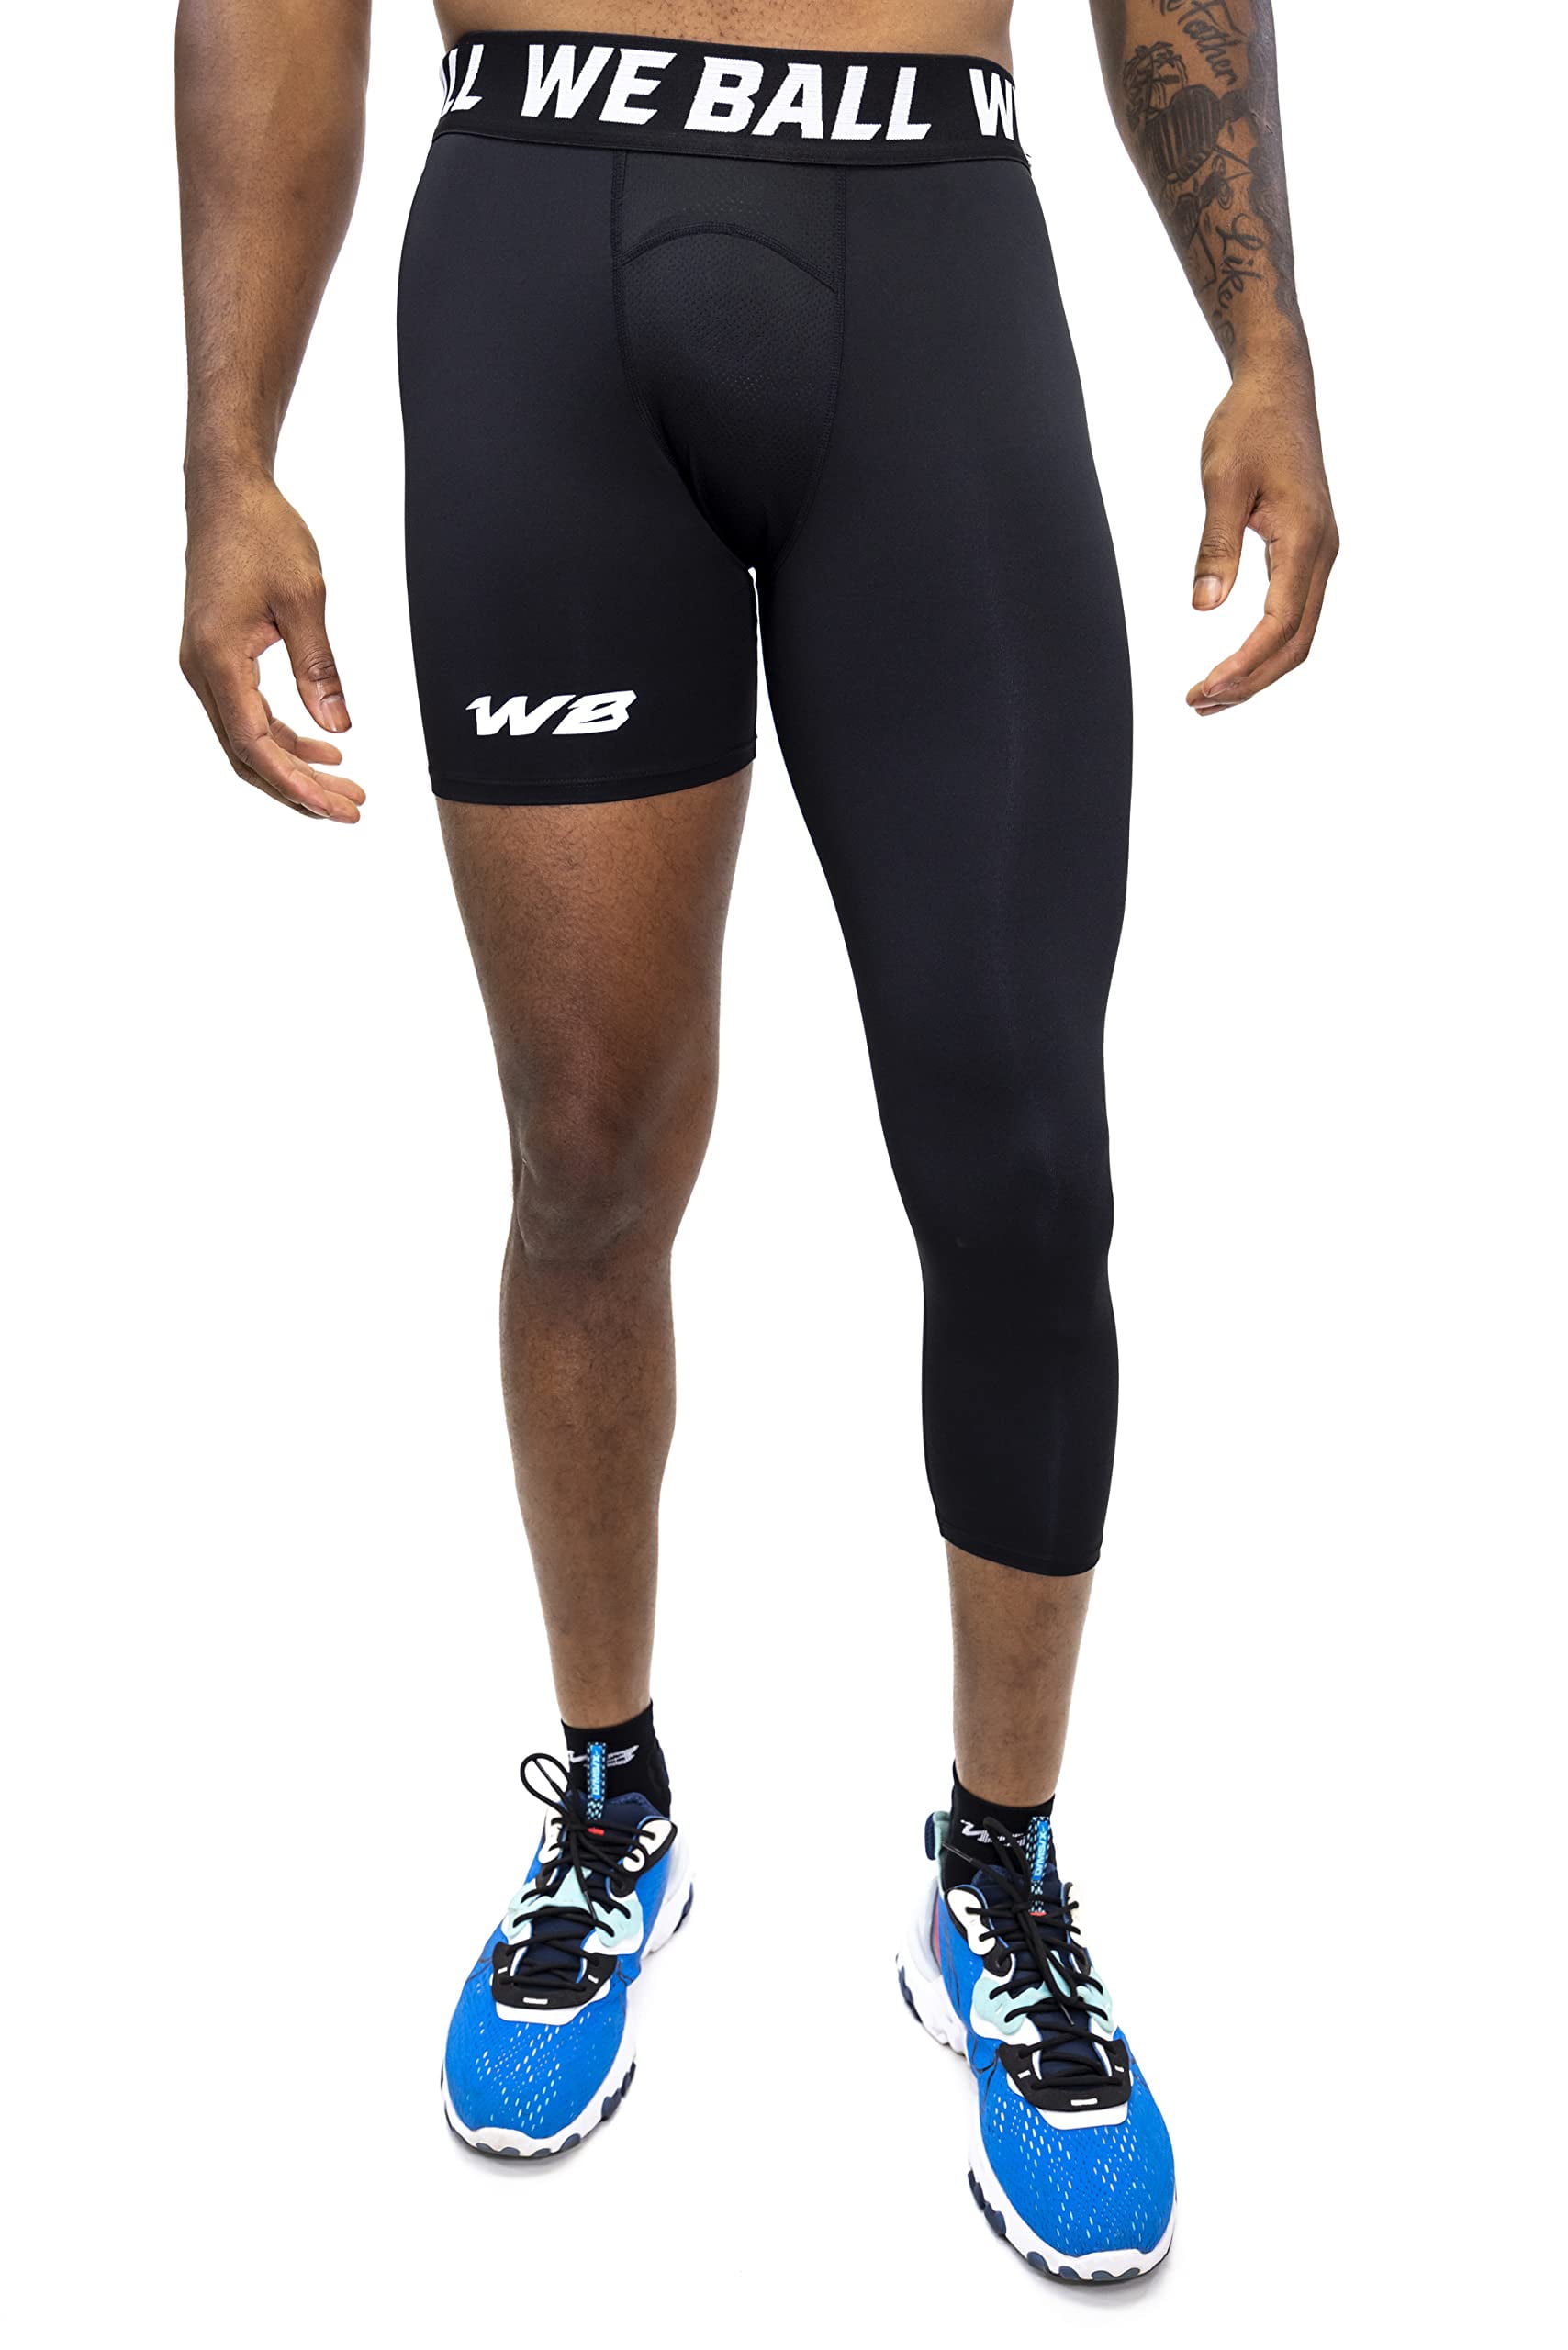 We Ball Sports Athletic Men's Single Leg Sports Tights  One Leg  Compression Base Layer Leggings for Men (Black, FULL L) 